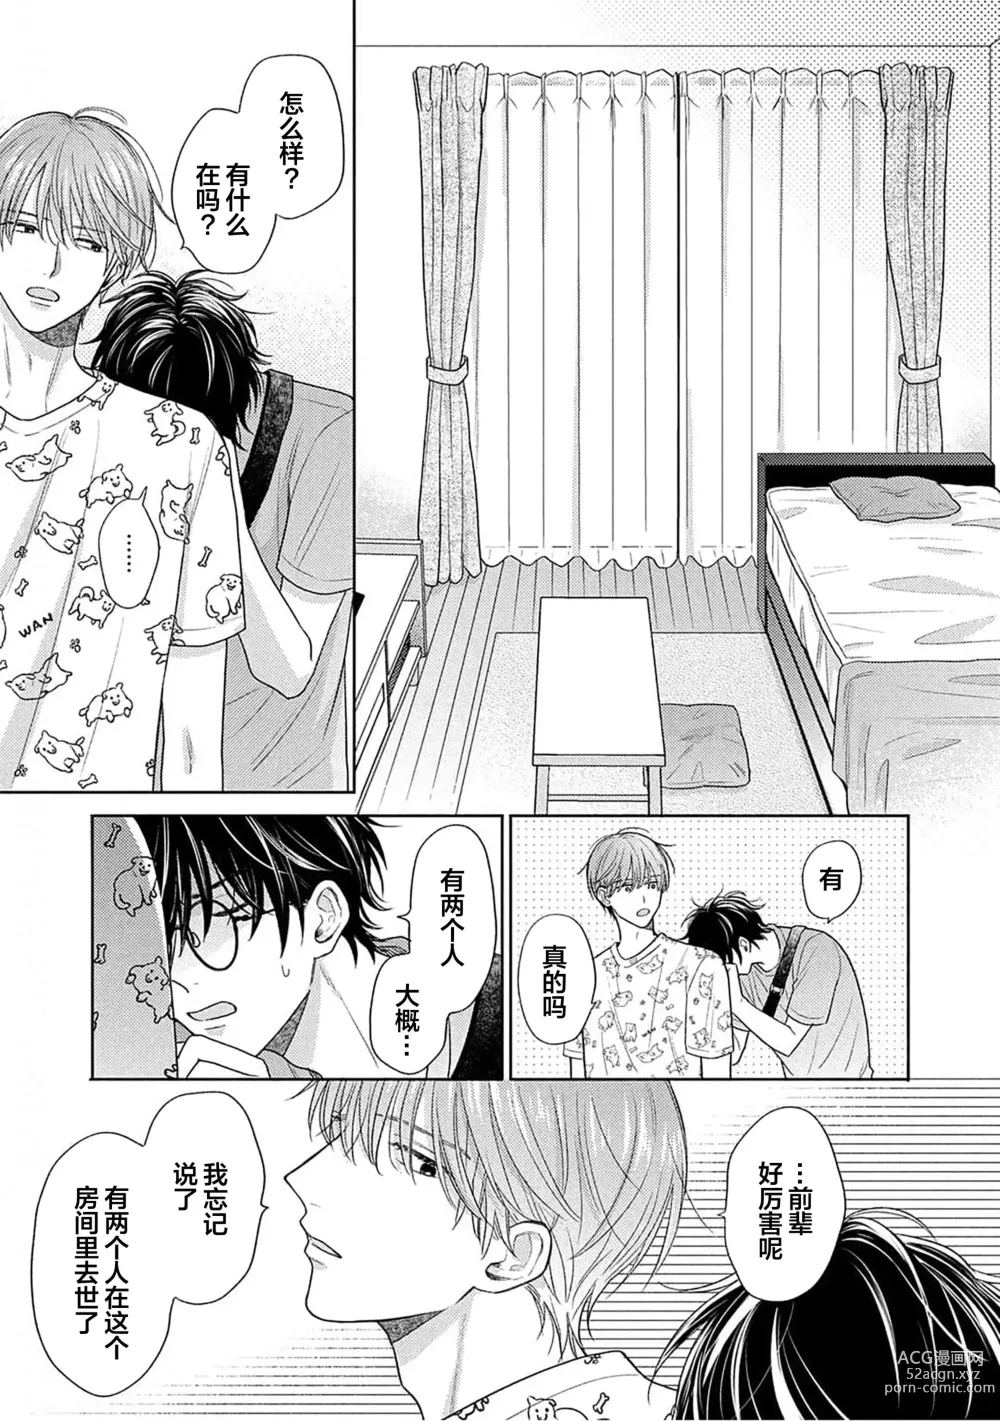 Page 18 of manga 这真的是恋爱吗?